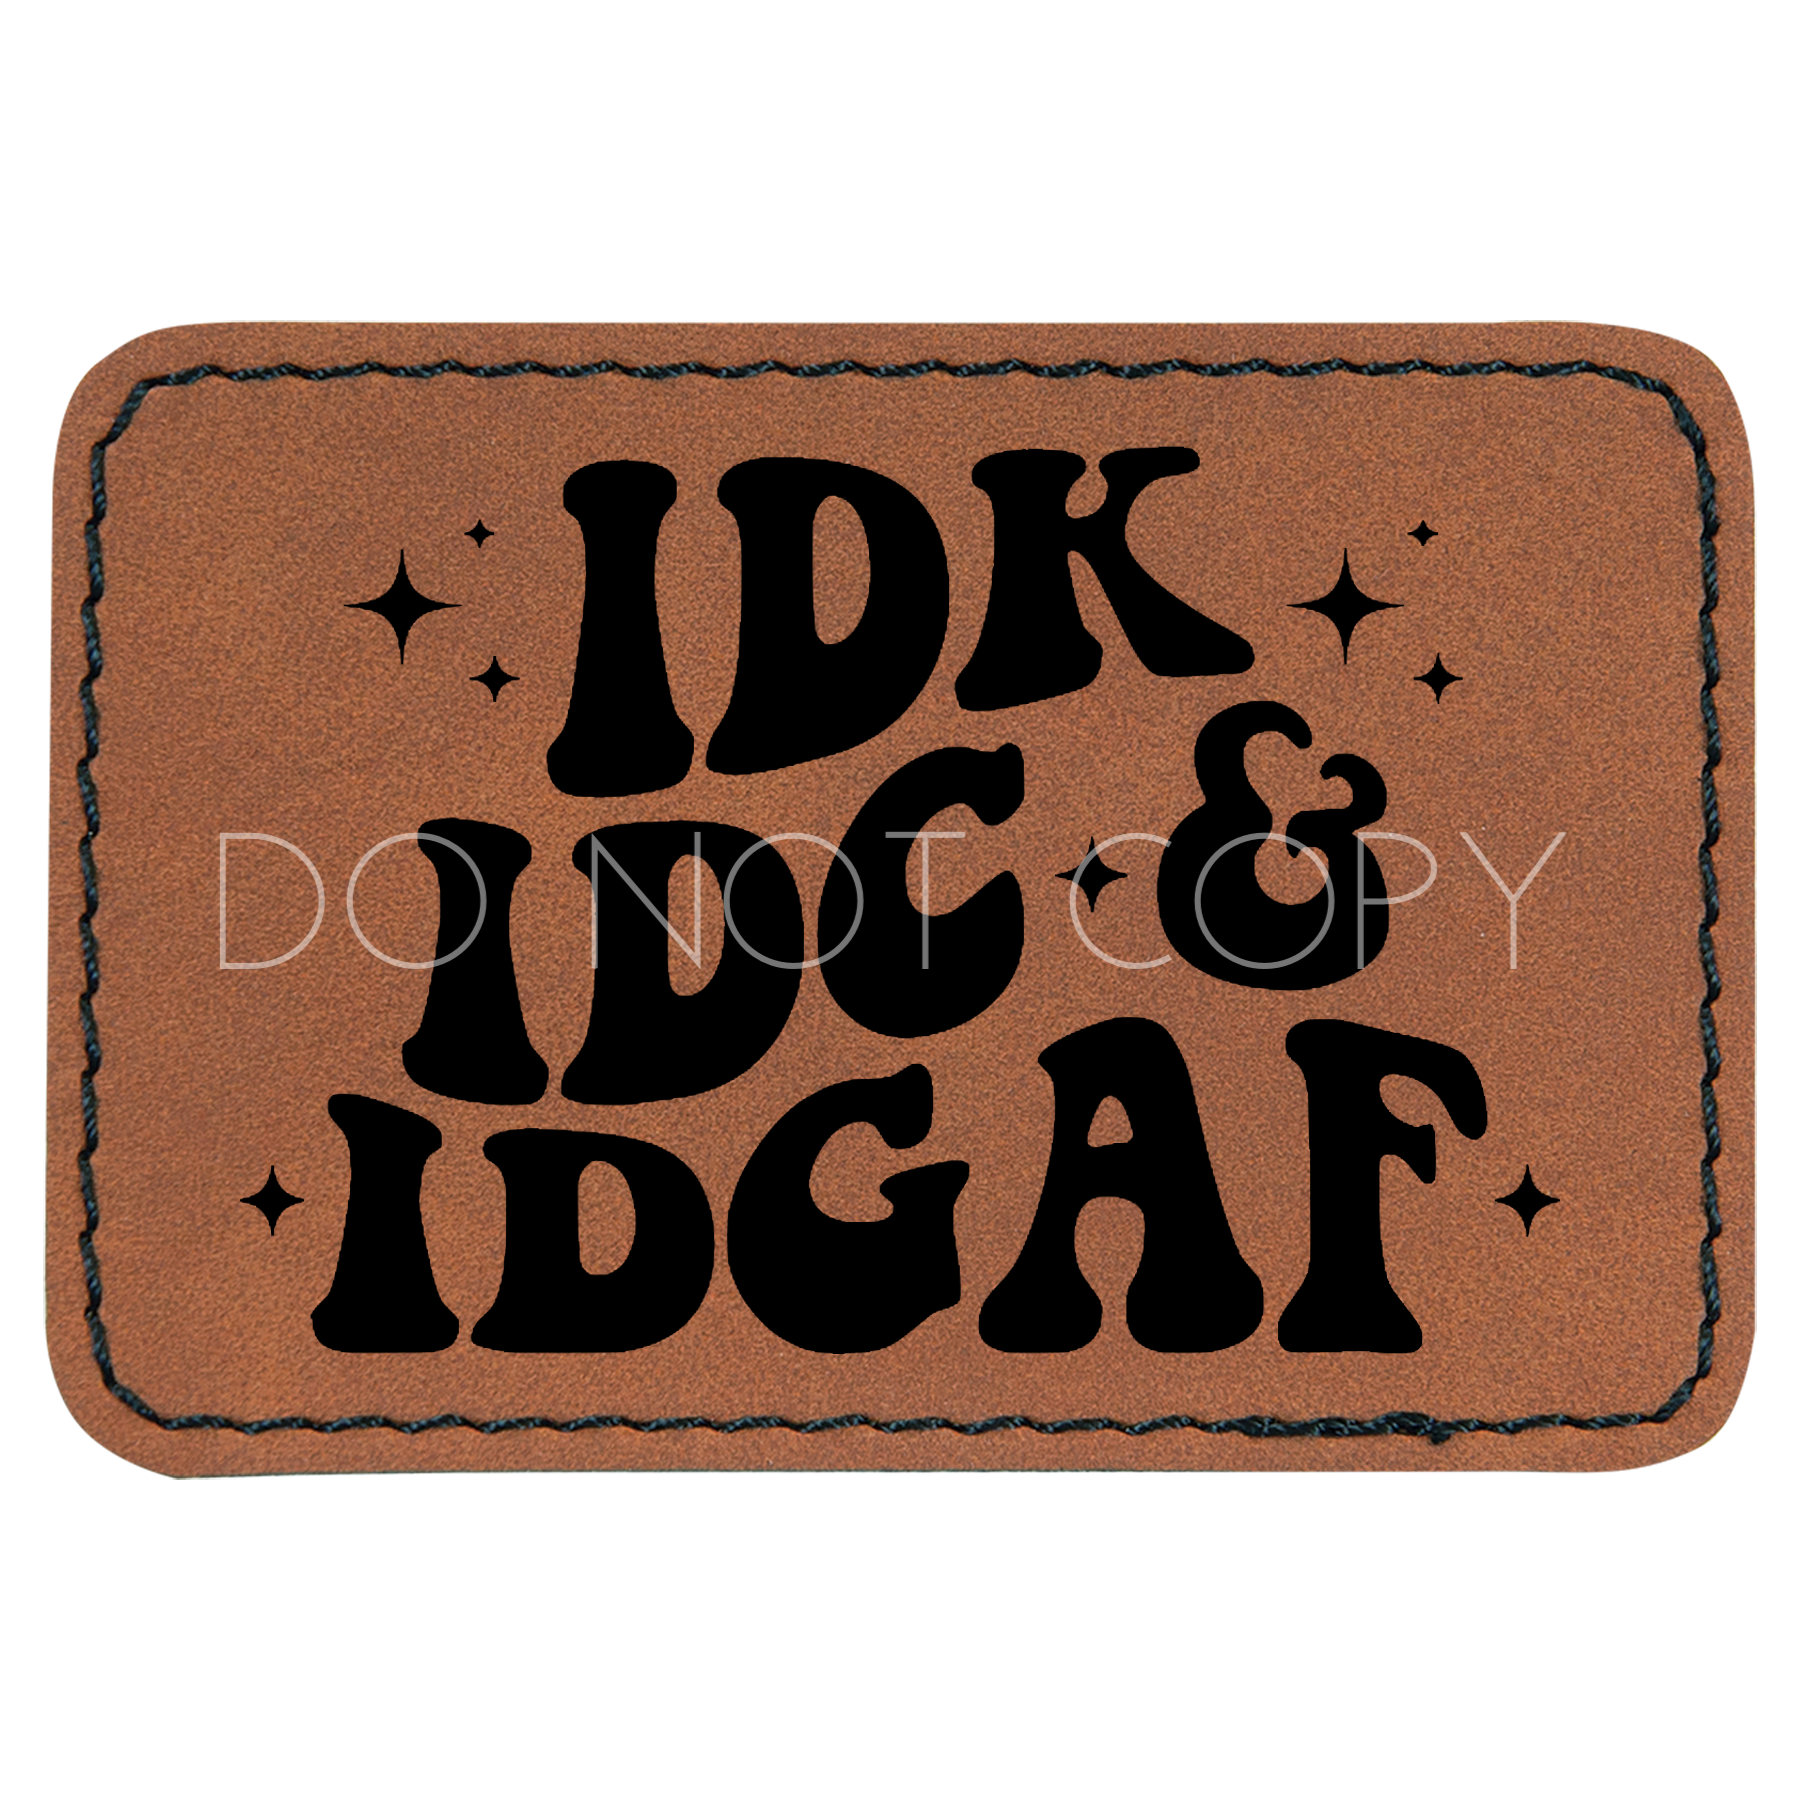 IDK, IDC, & IDGAF Patch